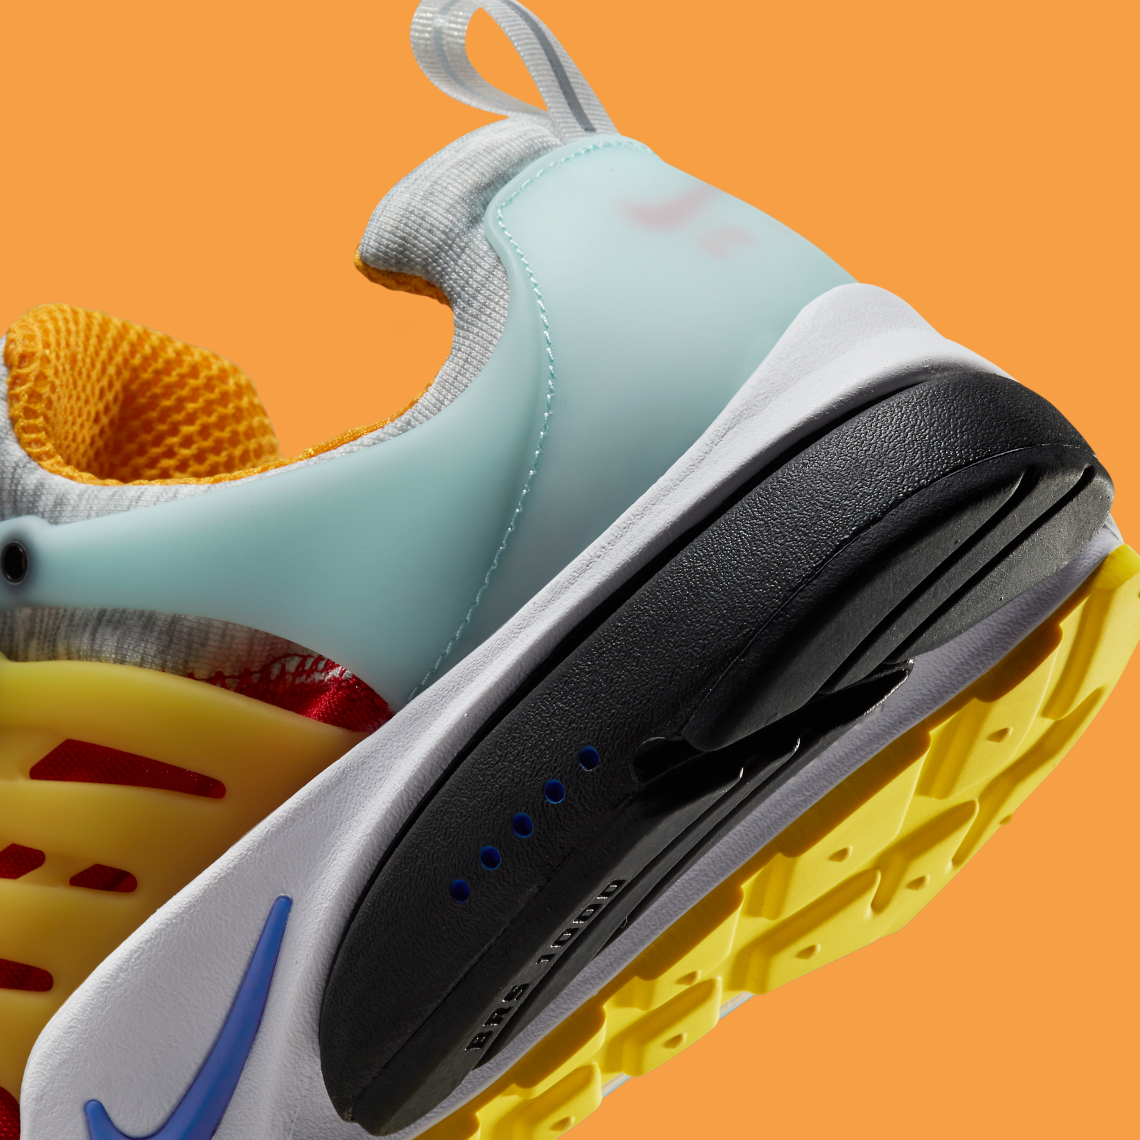 What The Nike Air Presto DM9554-900 Release Date | SneakerNews.com